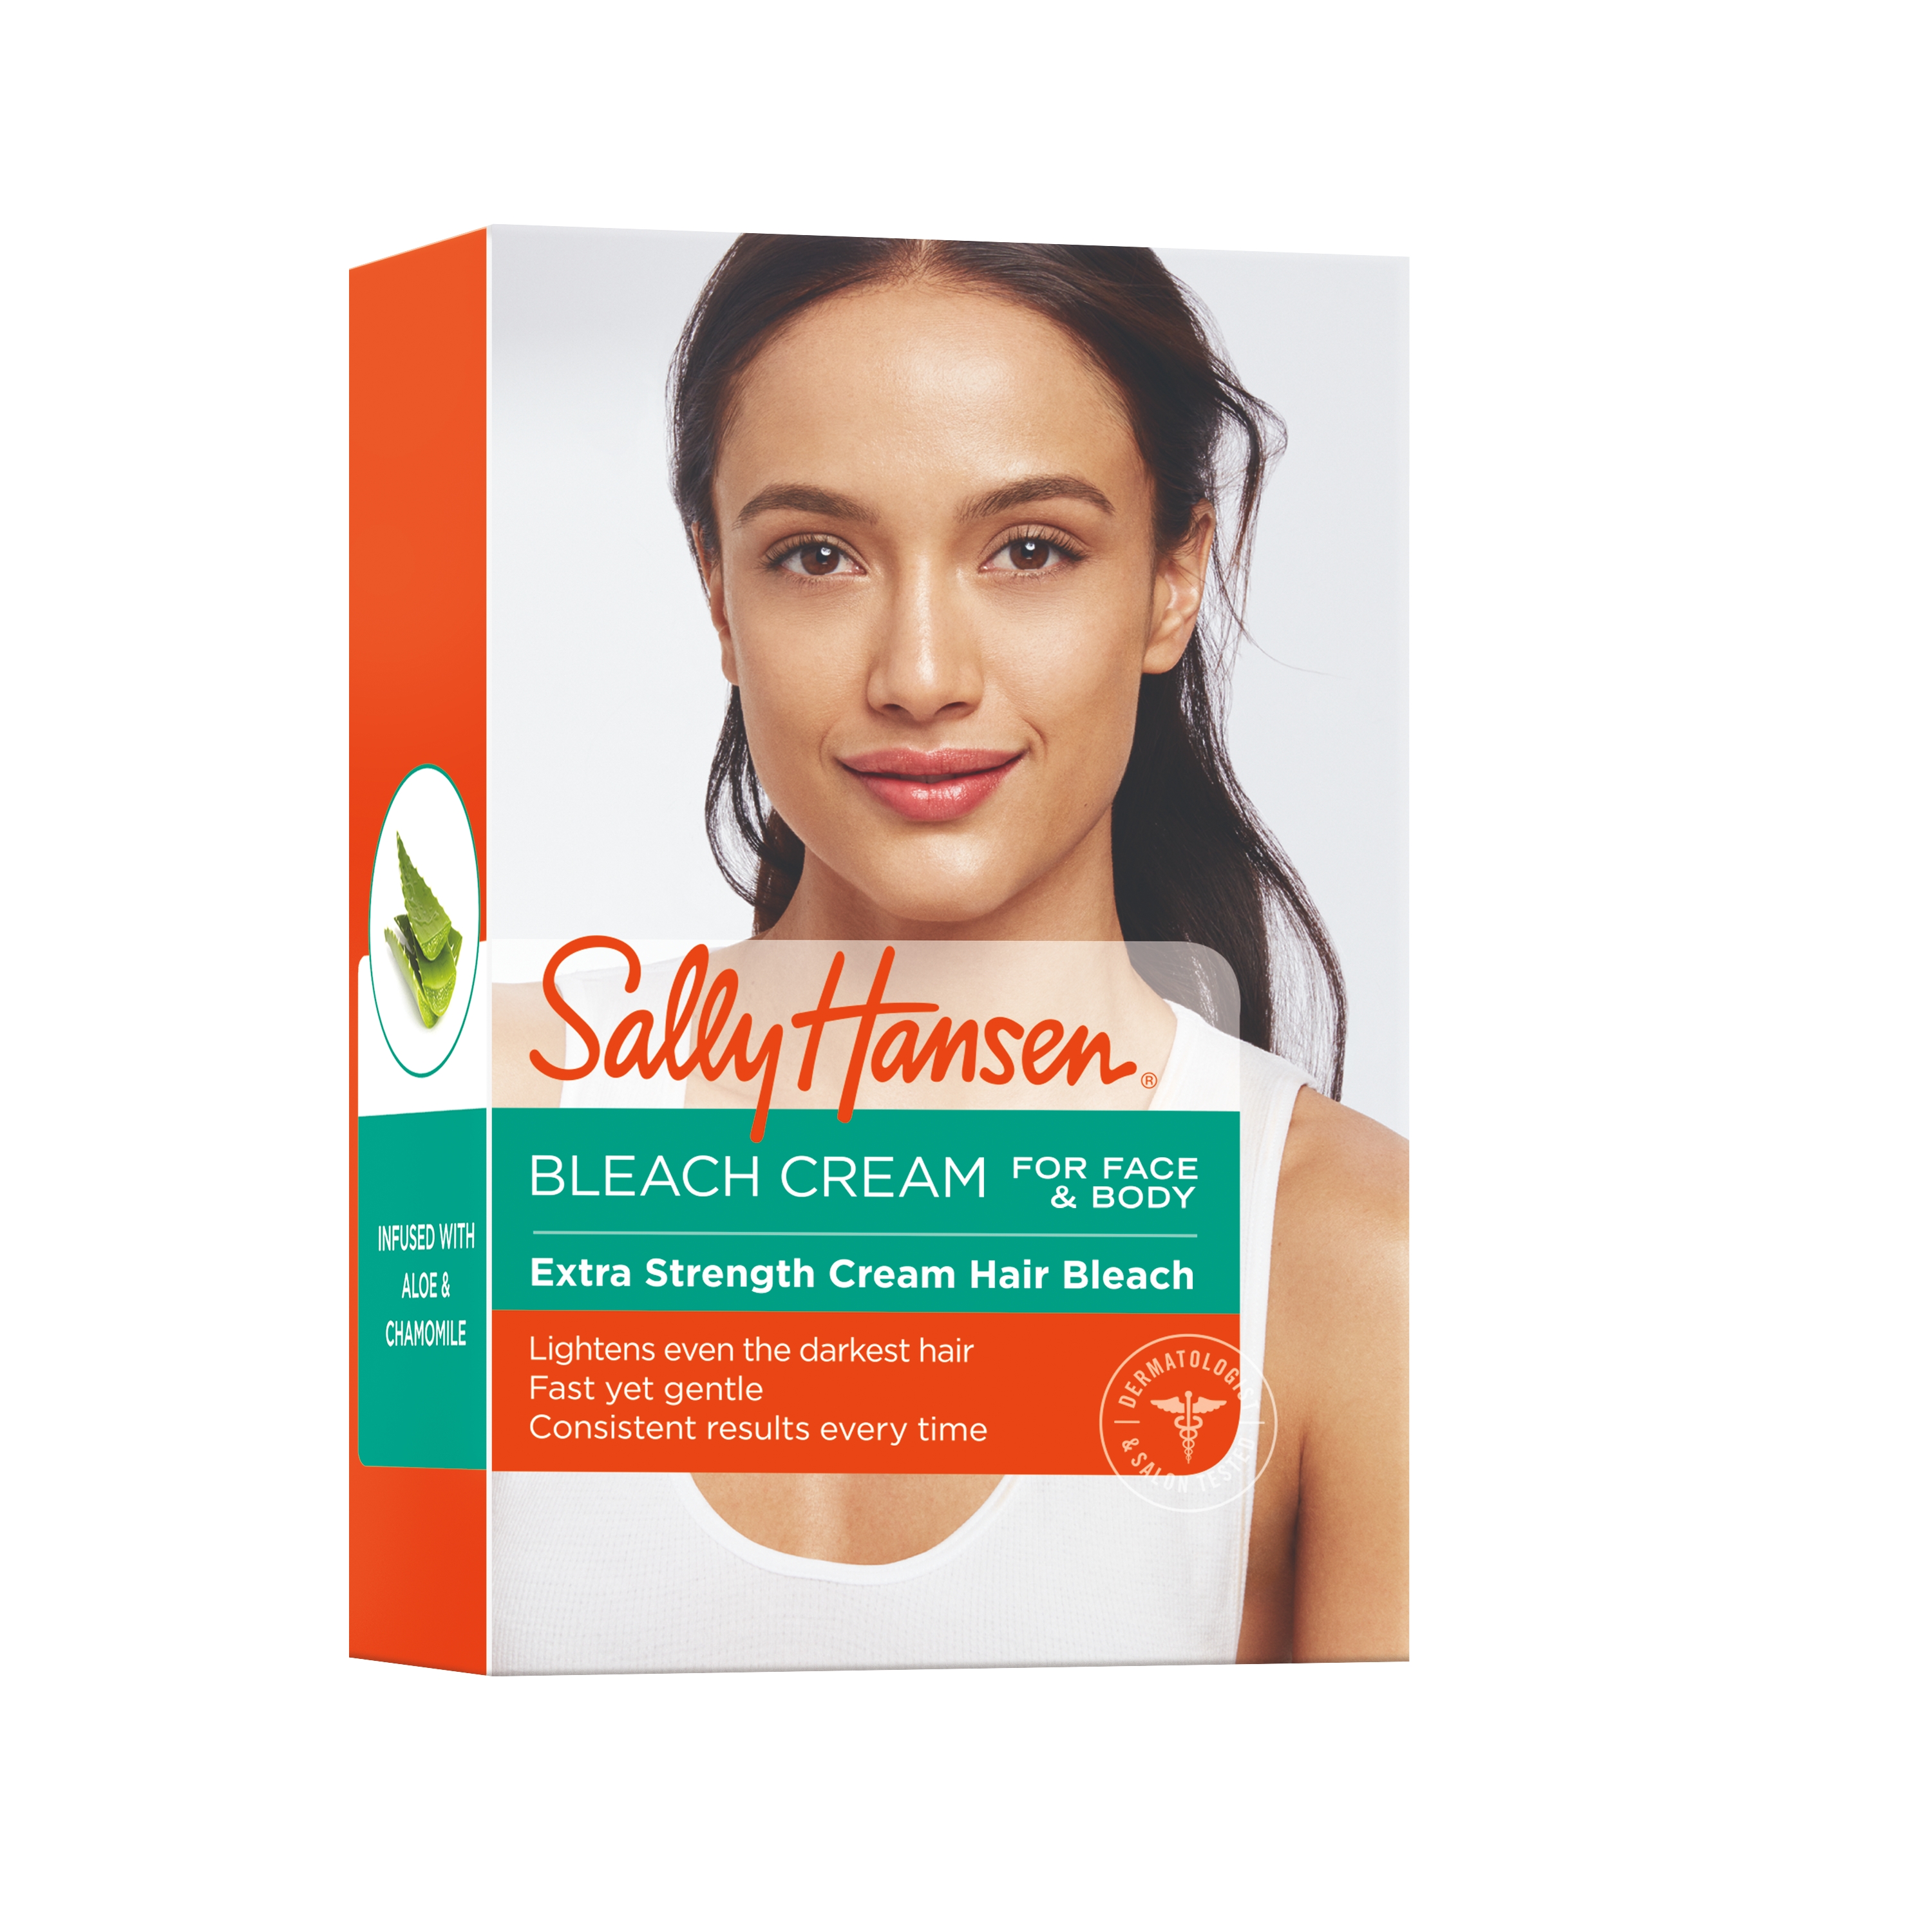 Sally Hansen Extra Strength Creme Hair Bleach For Face & Body Kit, 1.5 oz - image 2 of 4